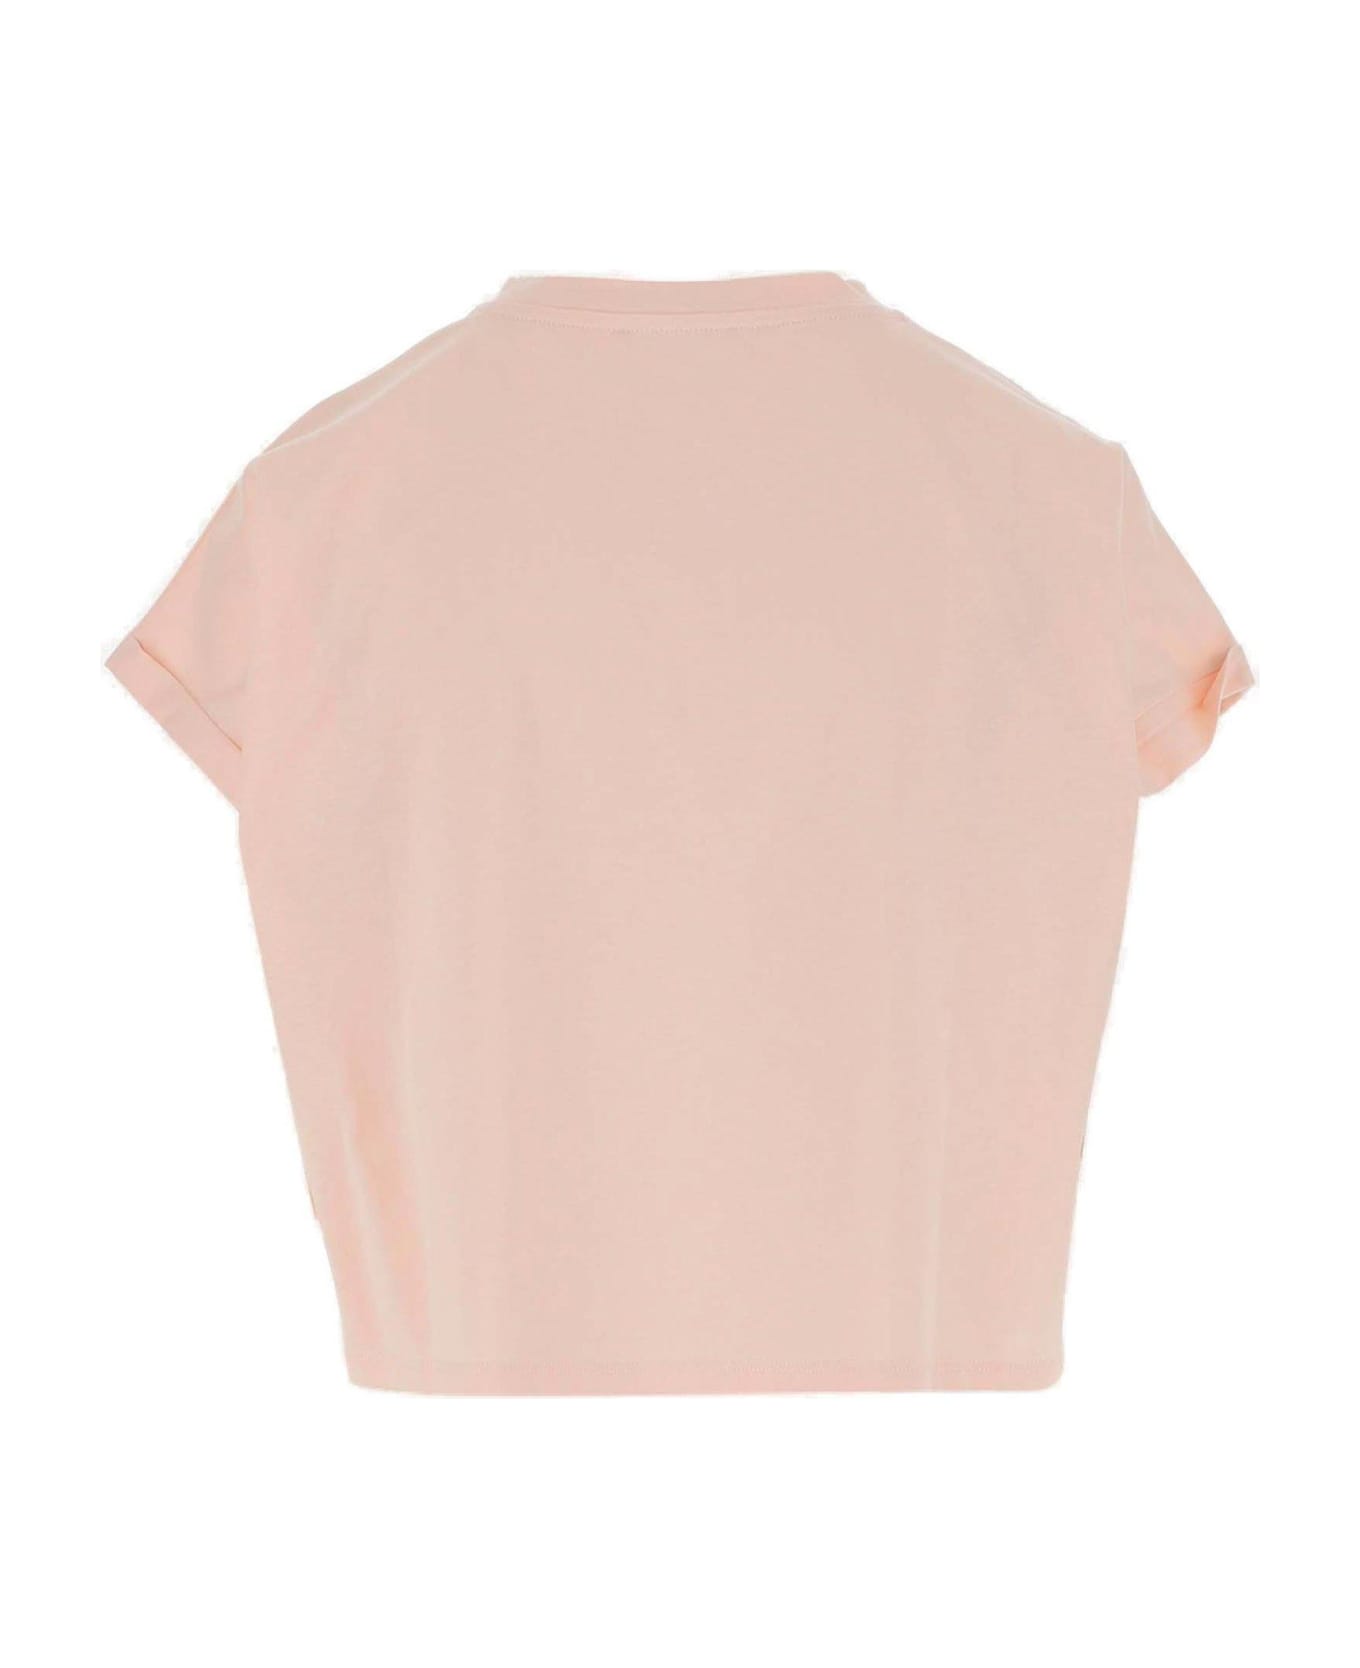 Balmain Logo Printed Short-sleeved Cropped T-shirt - Rosa/bianco Tシャツ